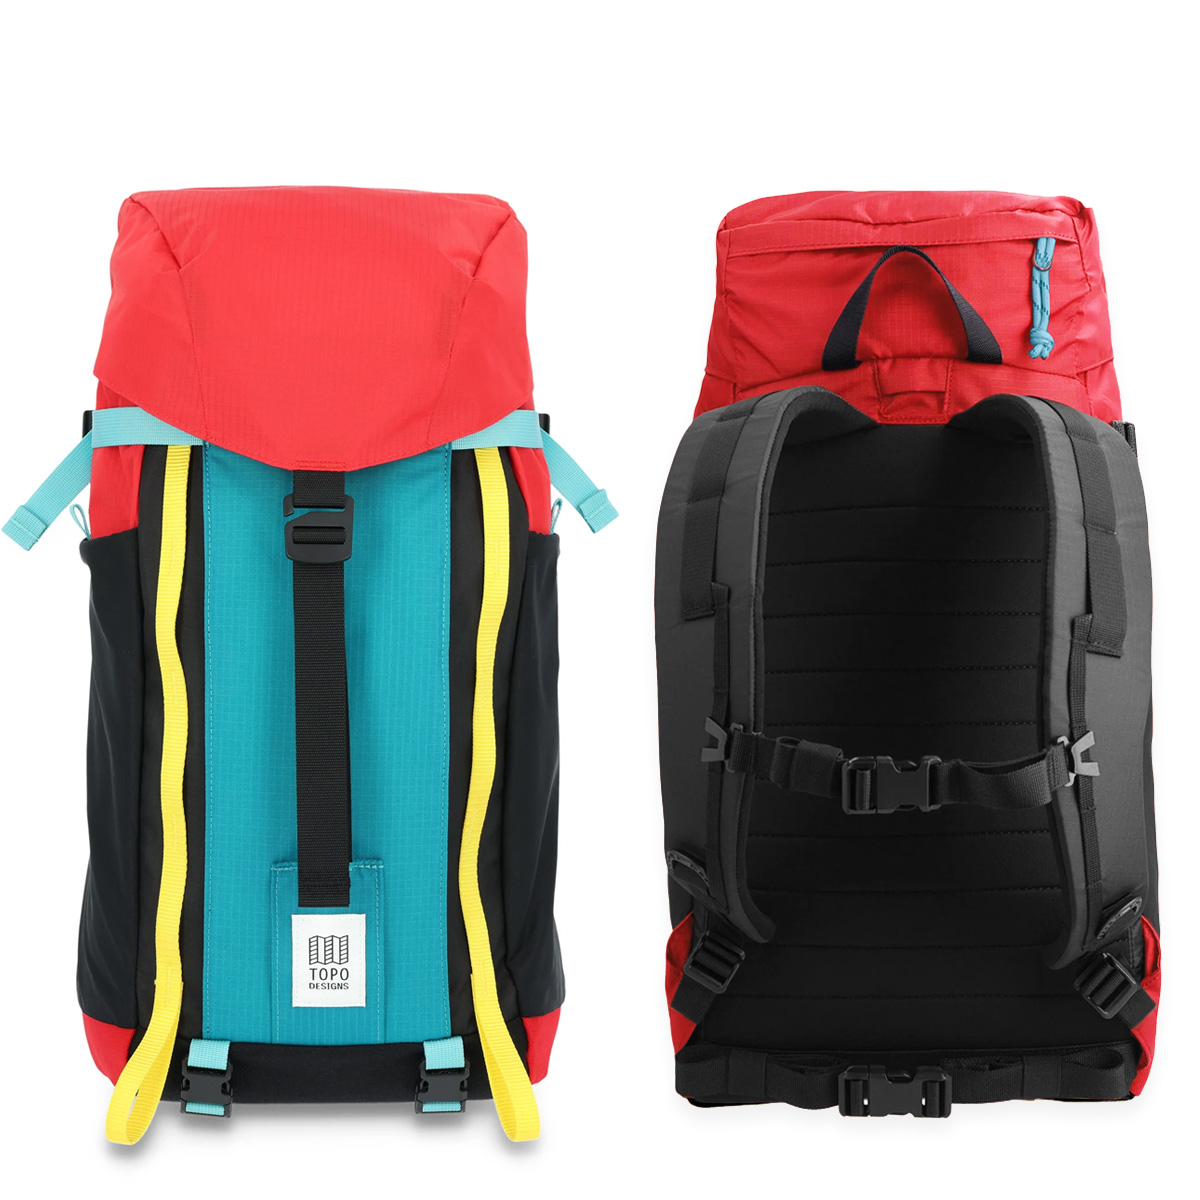 Topo Designs Mountain Pack 16L Red/Turquoise, voor en achterkant